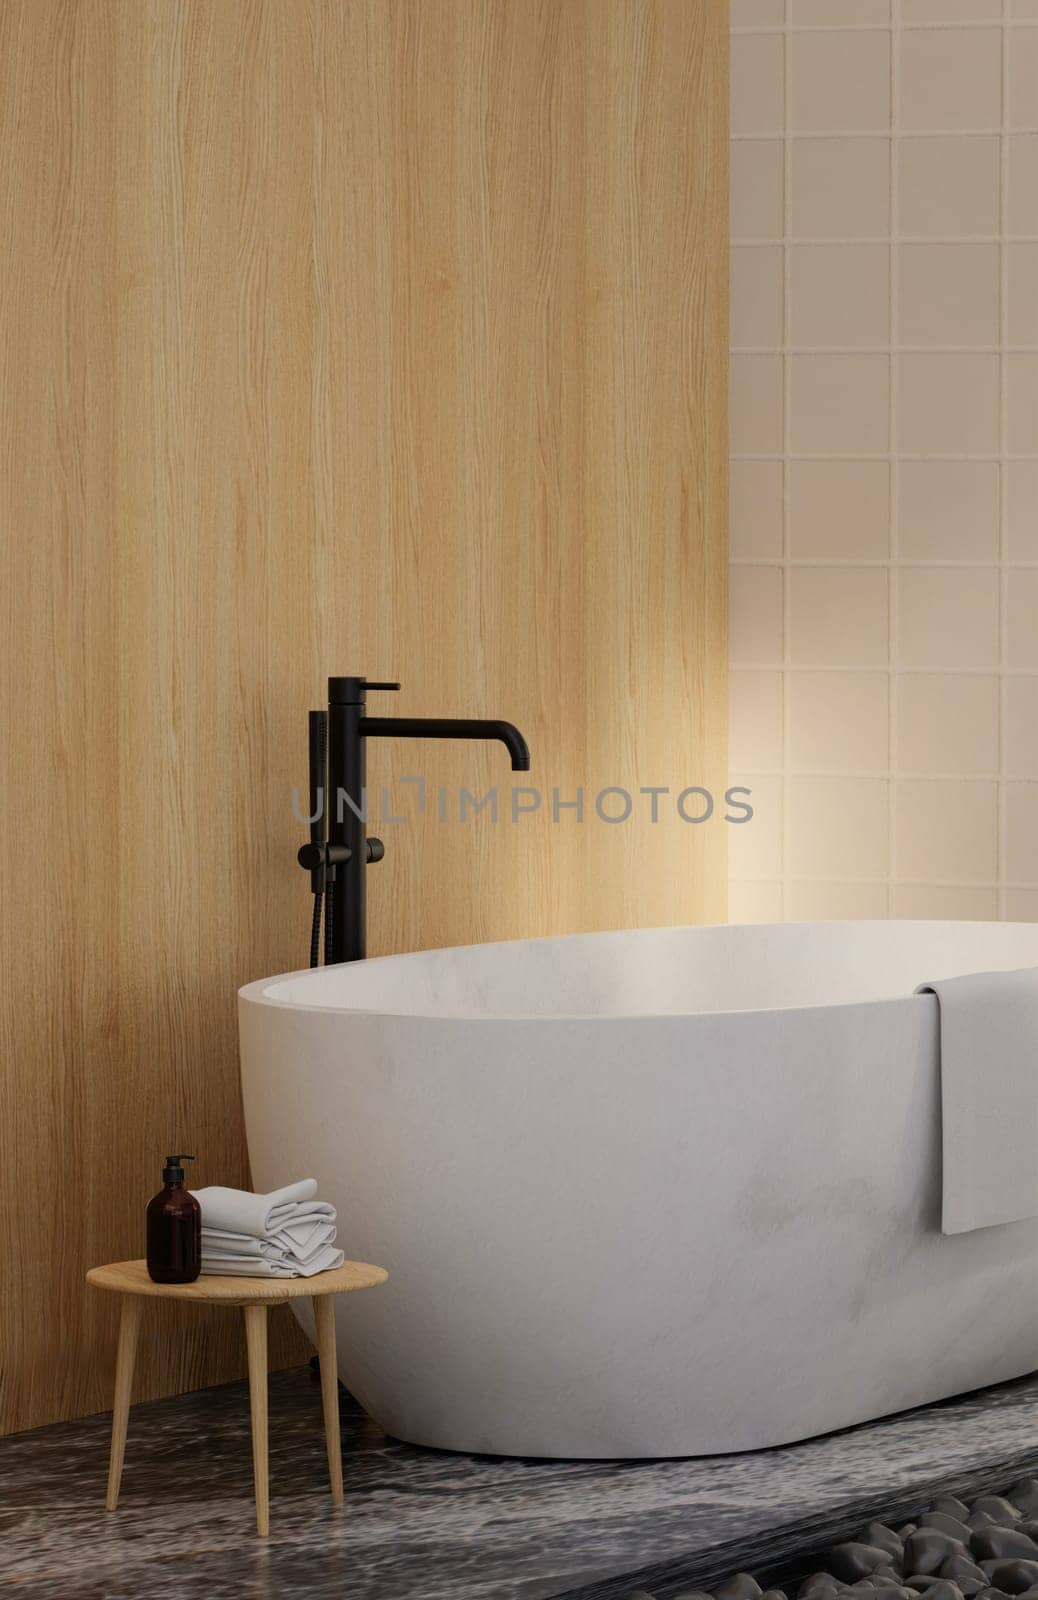 Minimal style white bathroom 3d render, wood wall and ceramic floor, The room has large windows. 3d render.